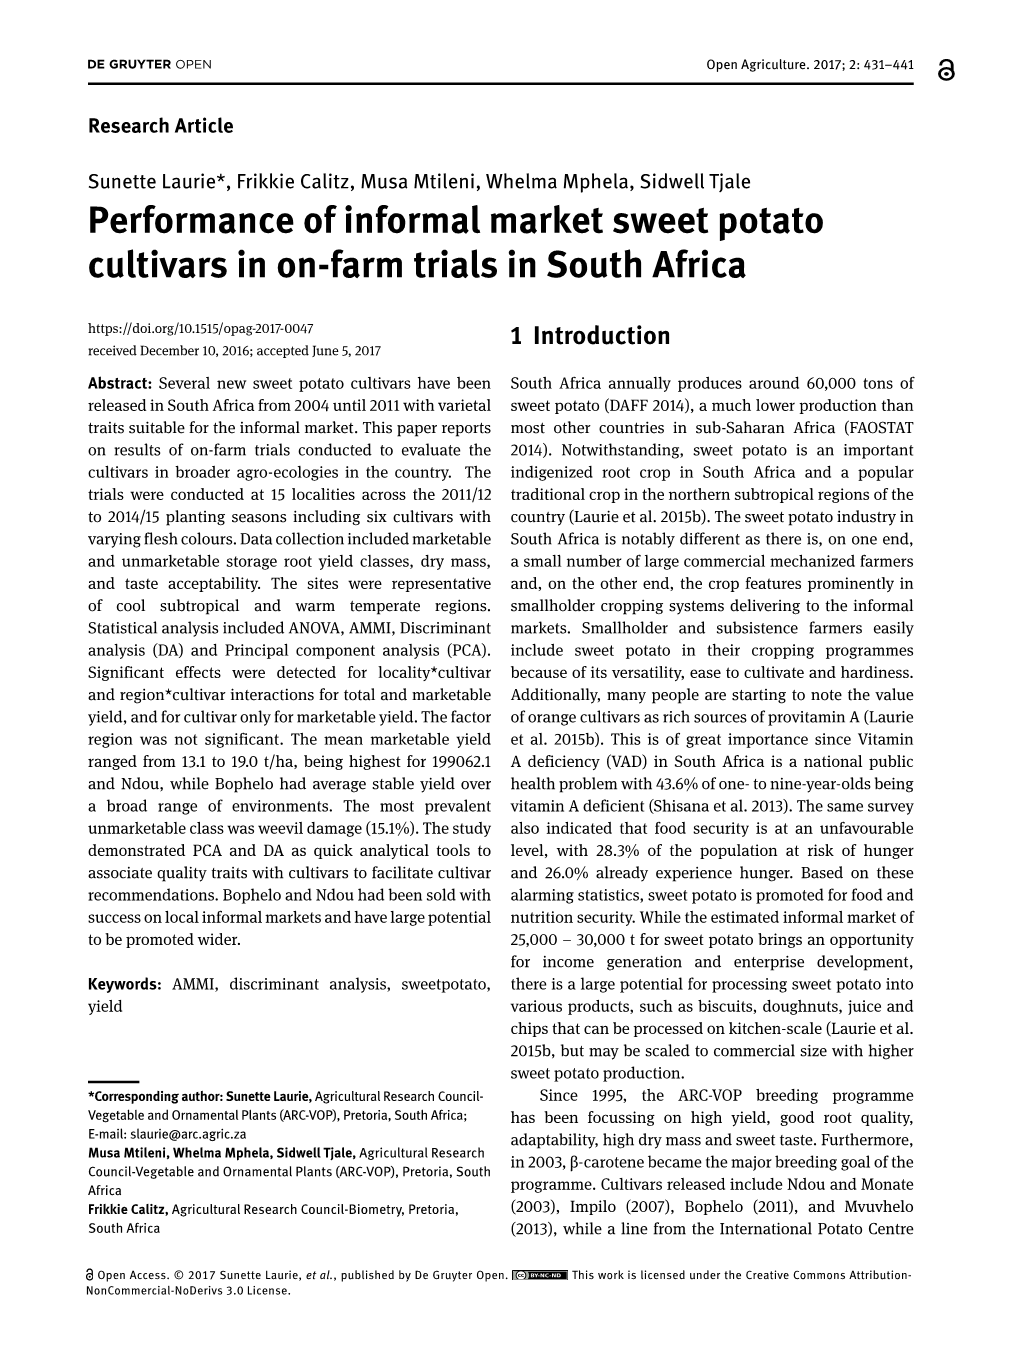 Performance of Informal Market Sweet Potato Cultivars in On-Farm Trials In